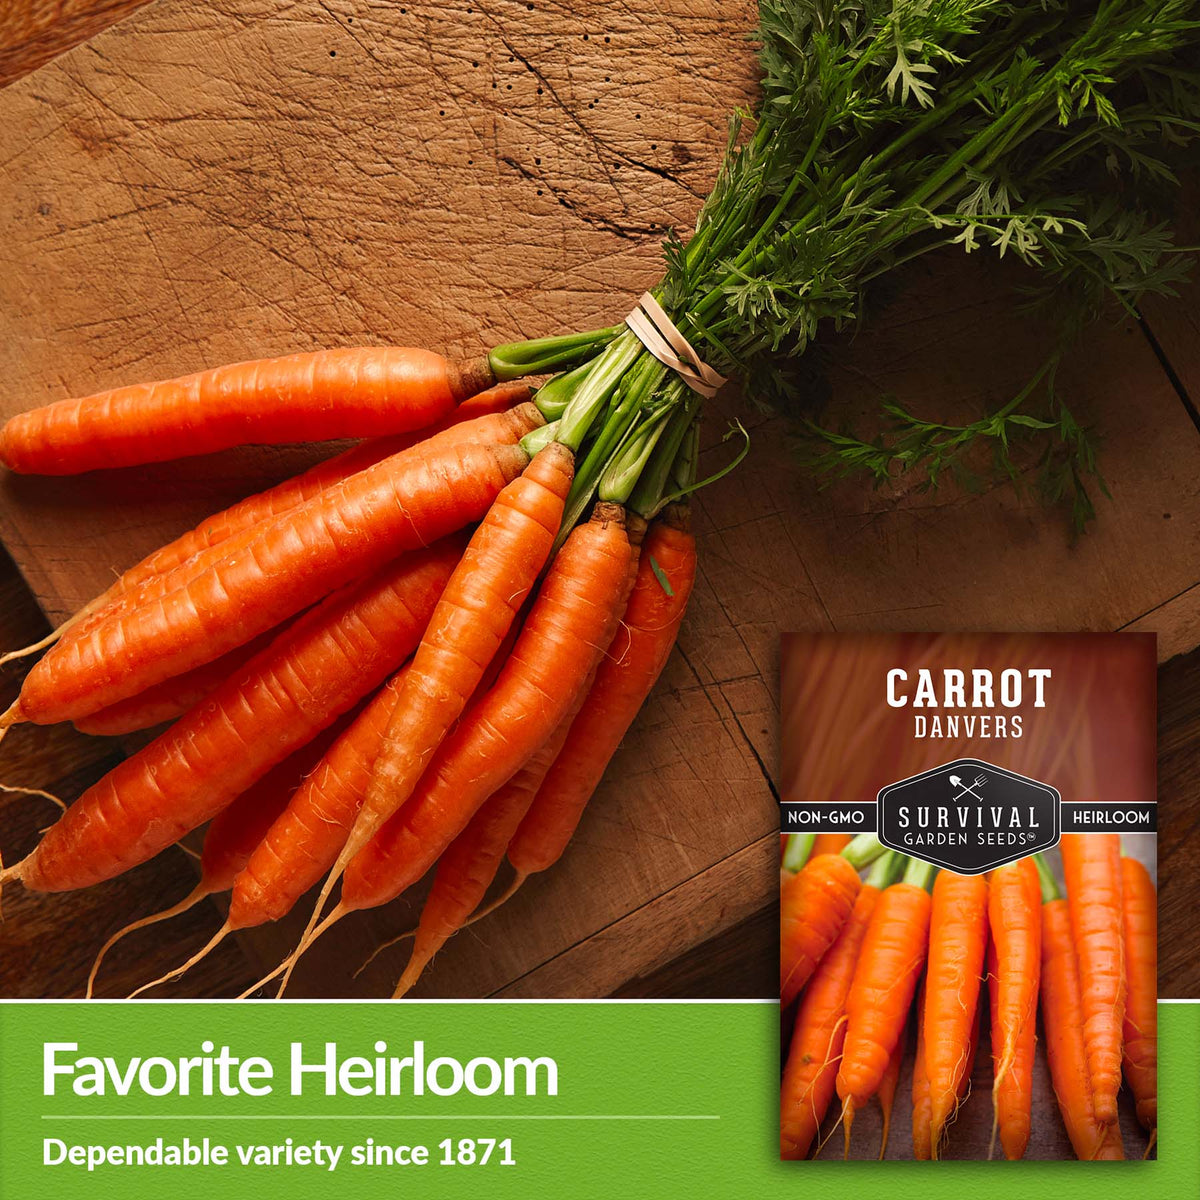 Danvers Carrots are an heirloom favorite since 1871